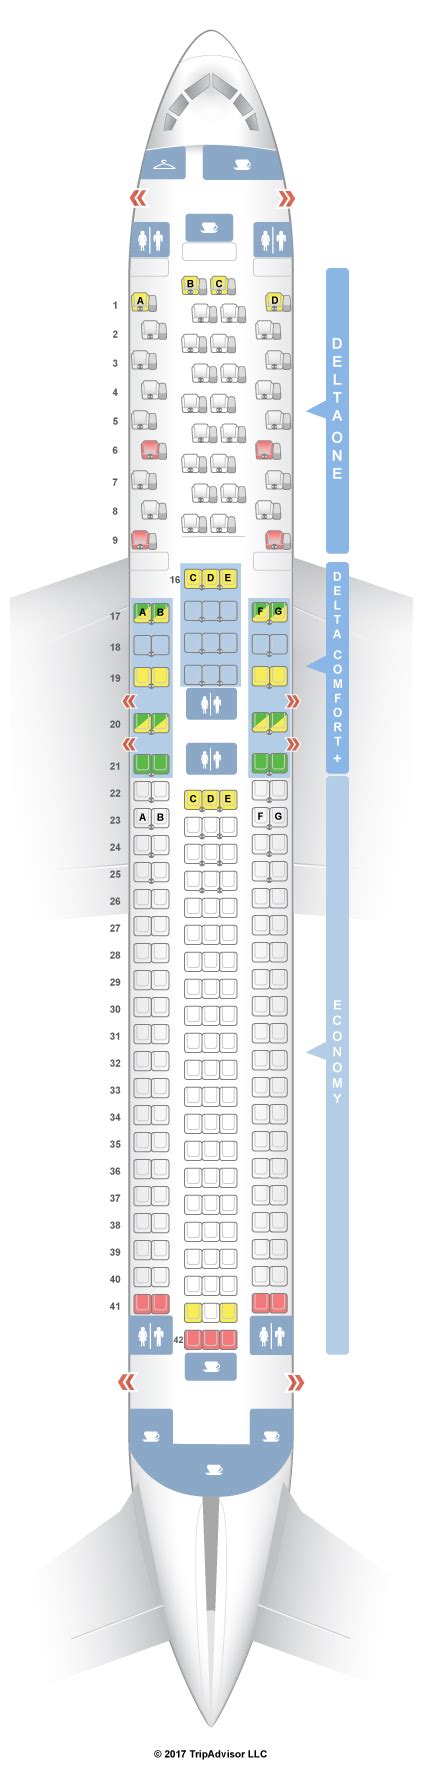 2 days ago · Delta Airbus A330 Seat Maps. Delta 